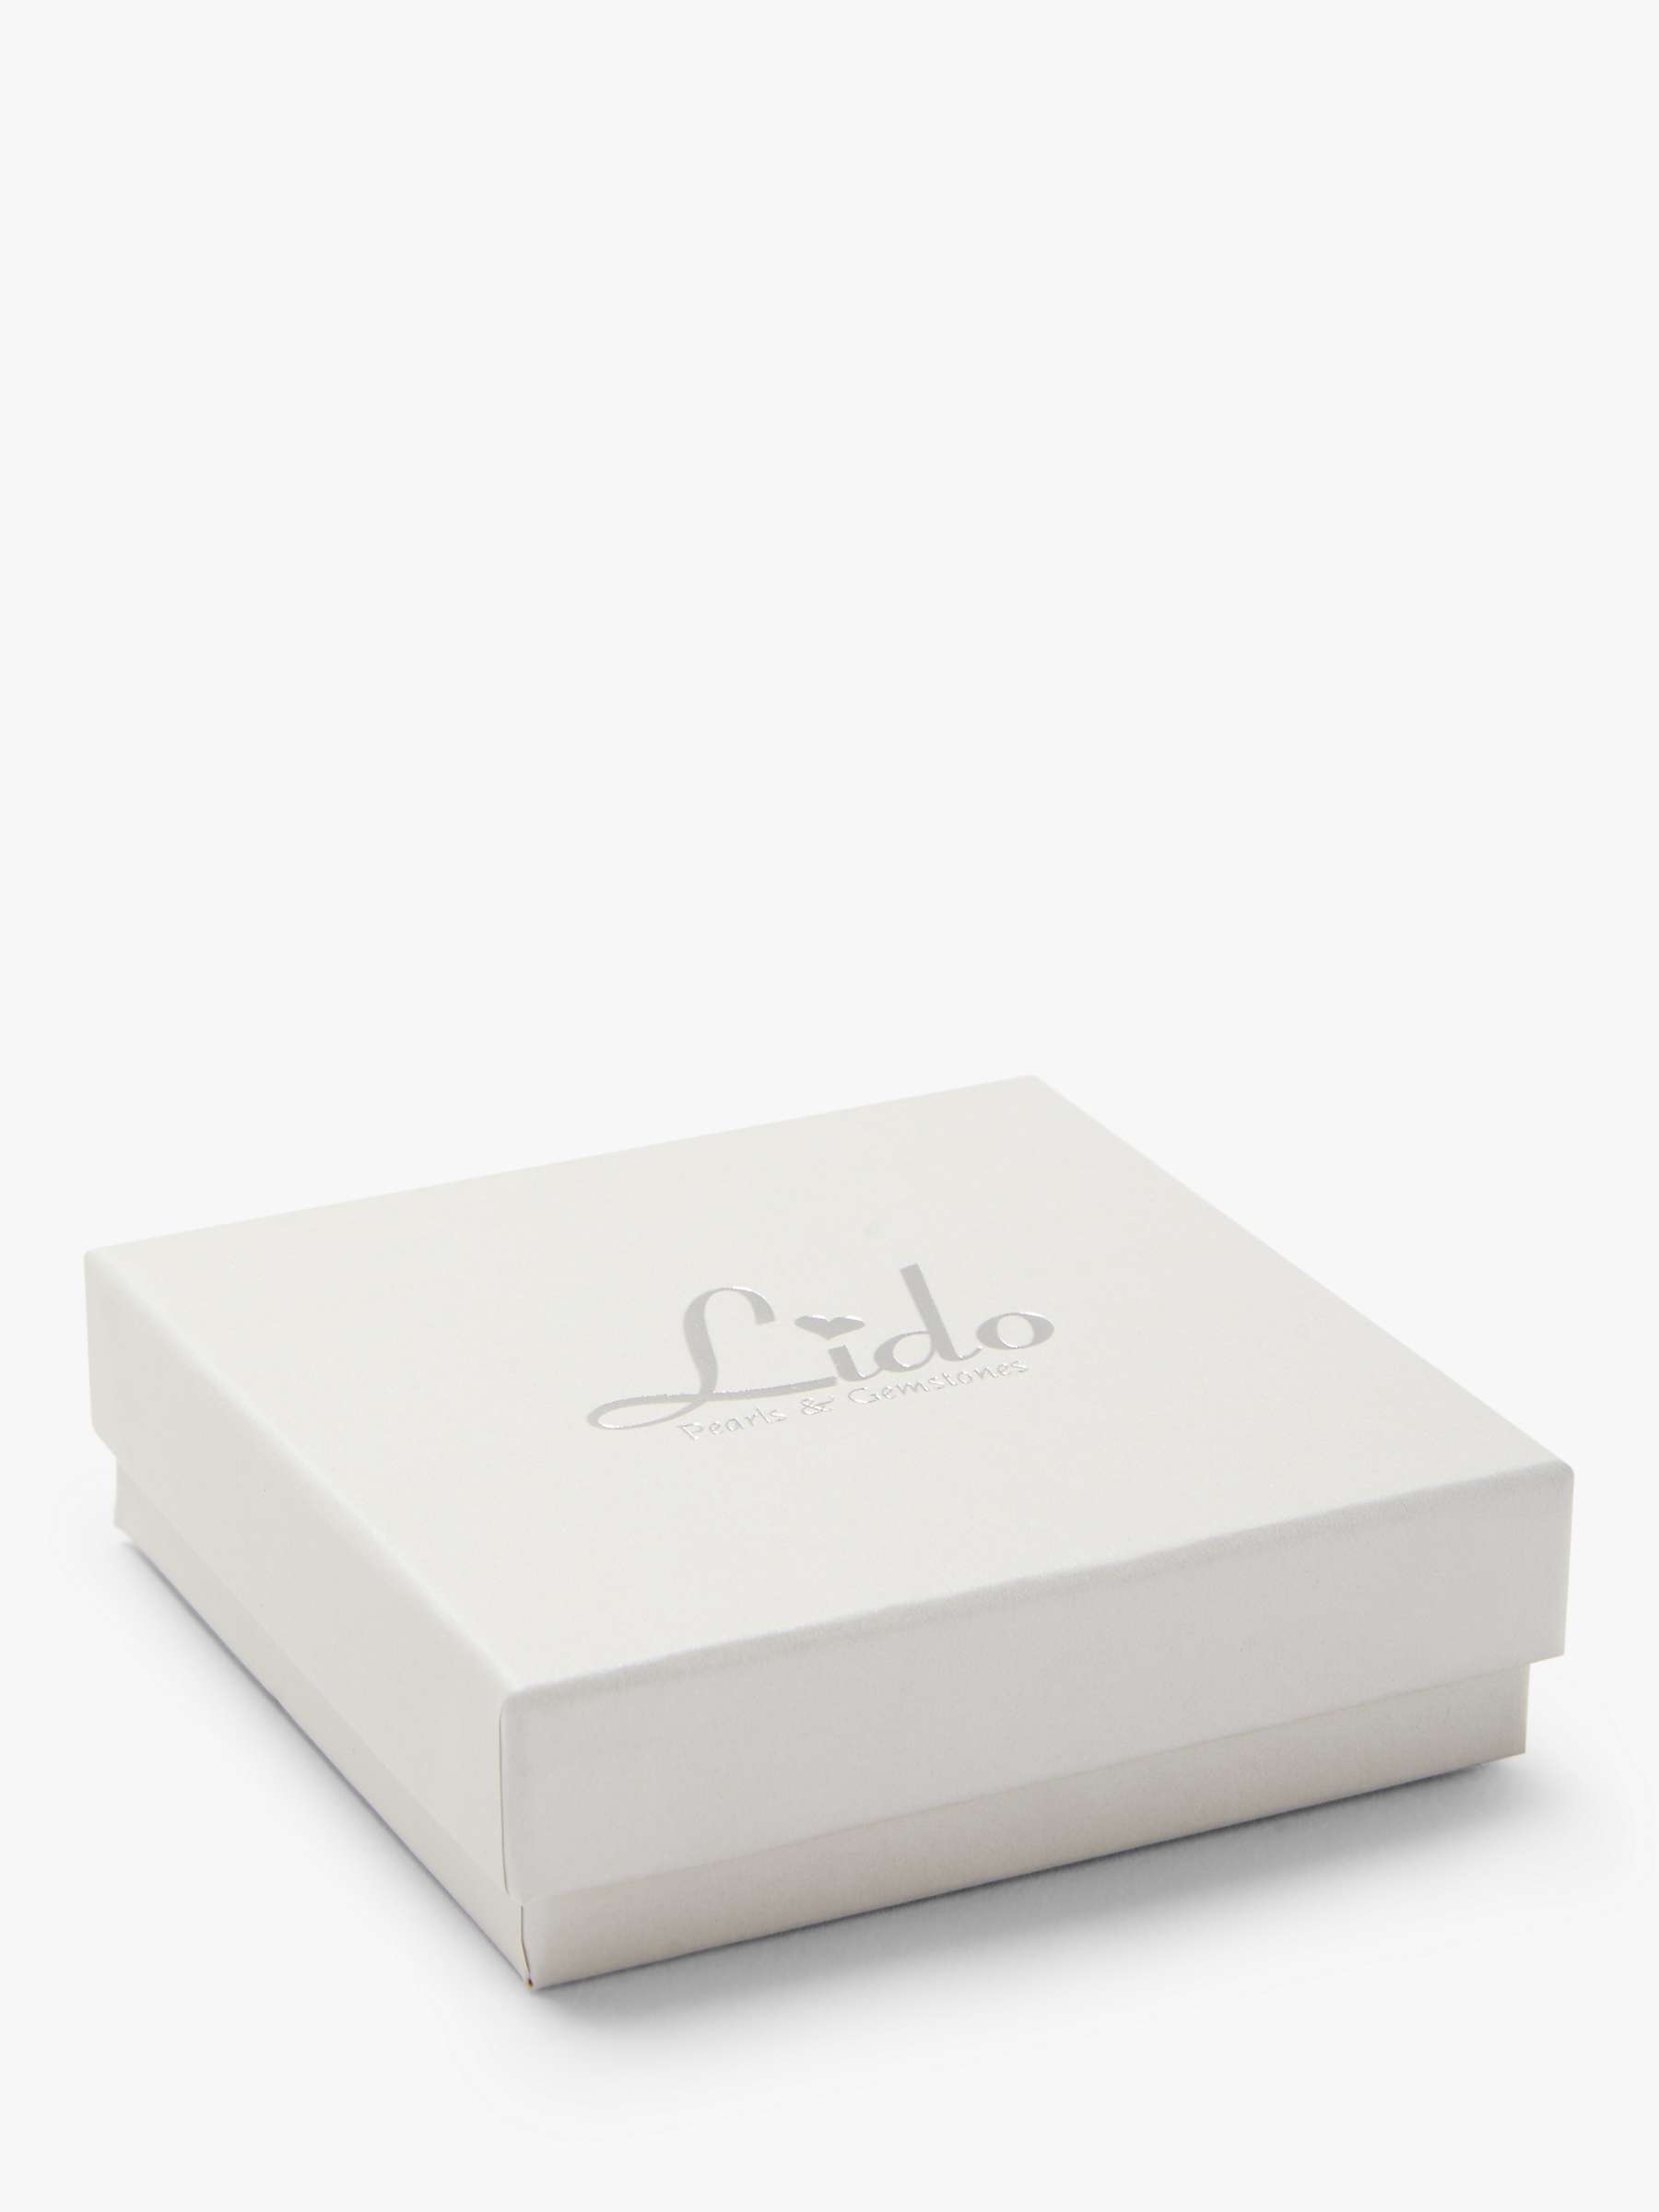 Buy Lido Freshwater Pearl Bracelet, White Online at johnlewis.com